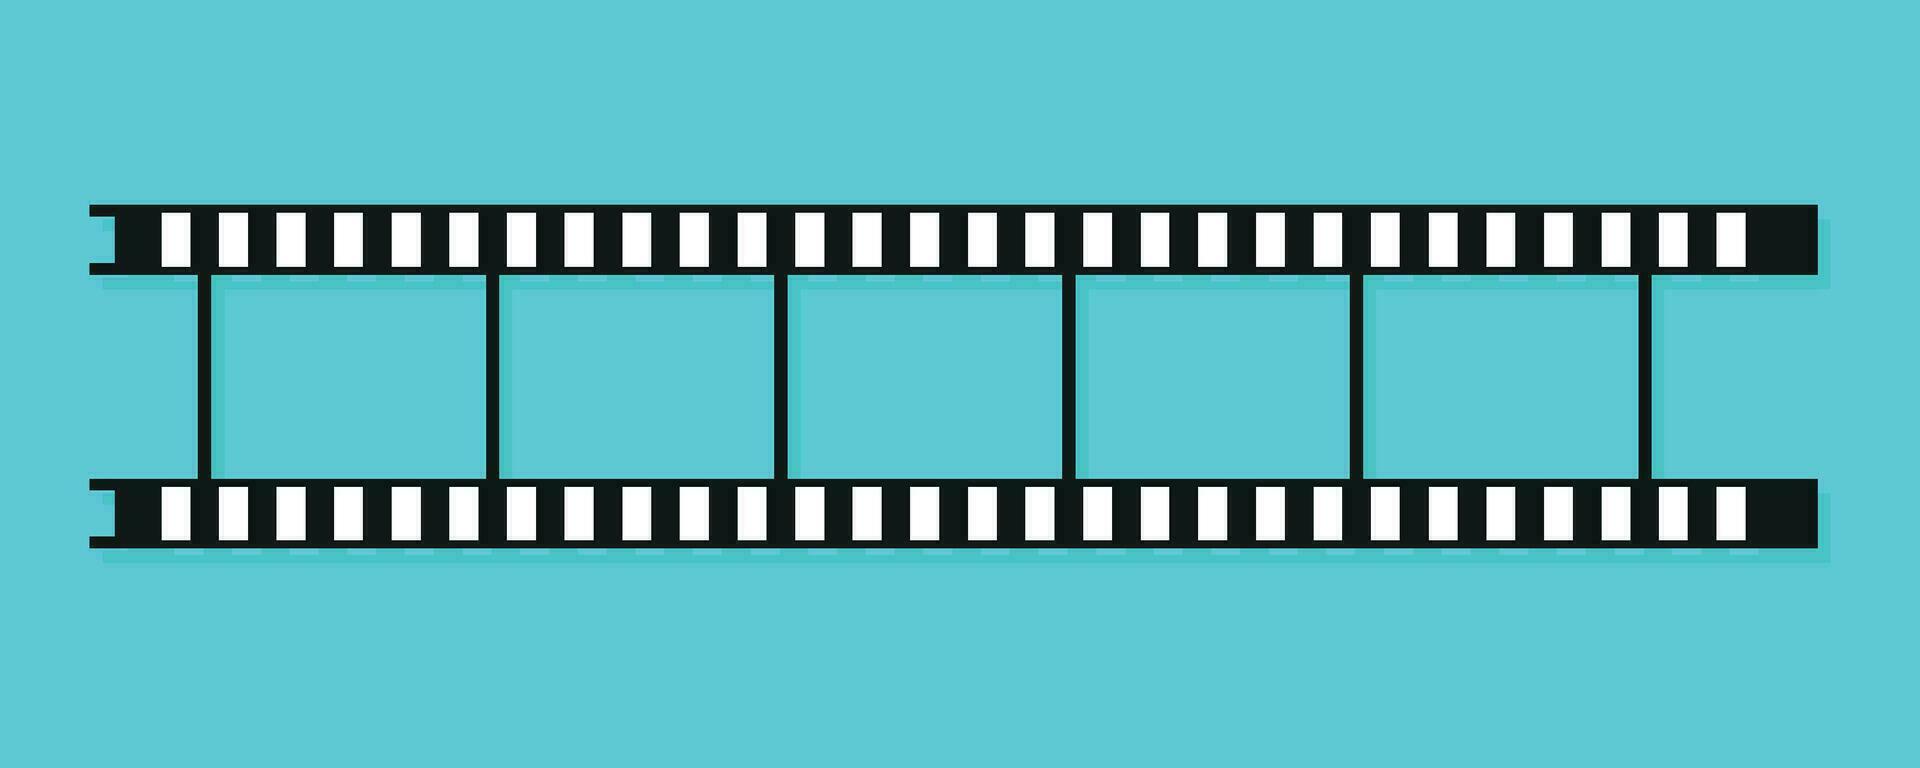 Film Film lange Streifen, Kino oder fotografieren Kamera lange Film Streifen, Filmstreifen rollen Rahmen Vektor Illustration.